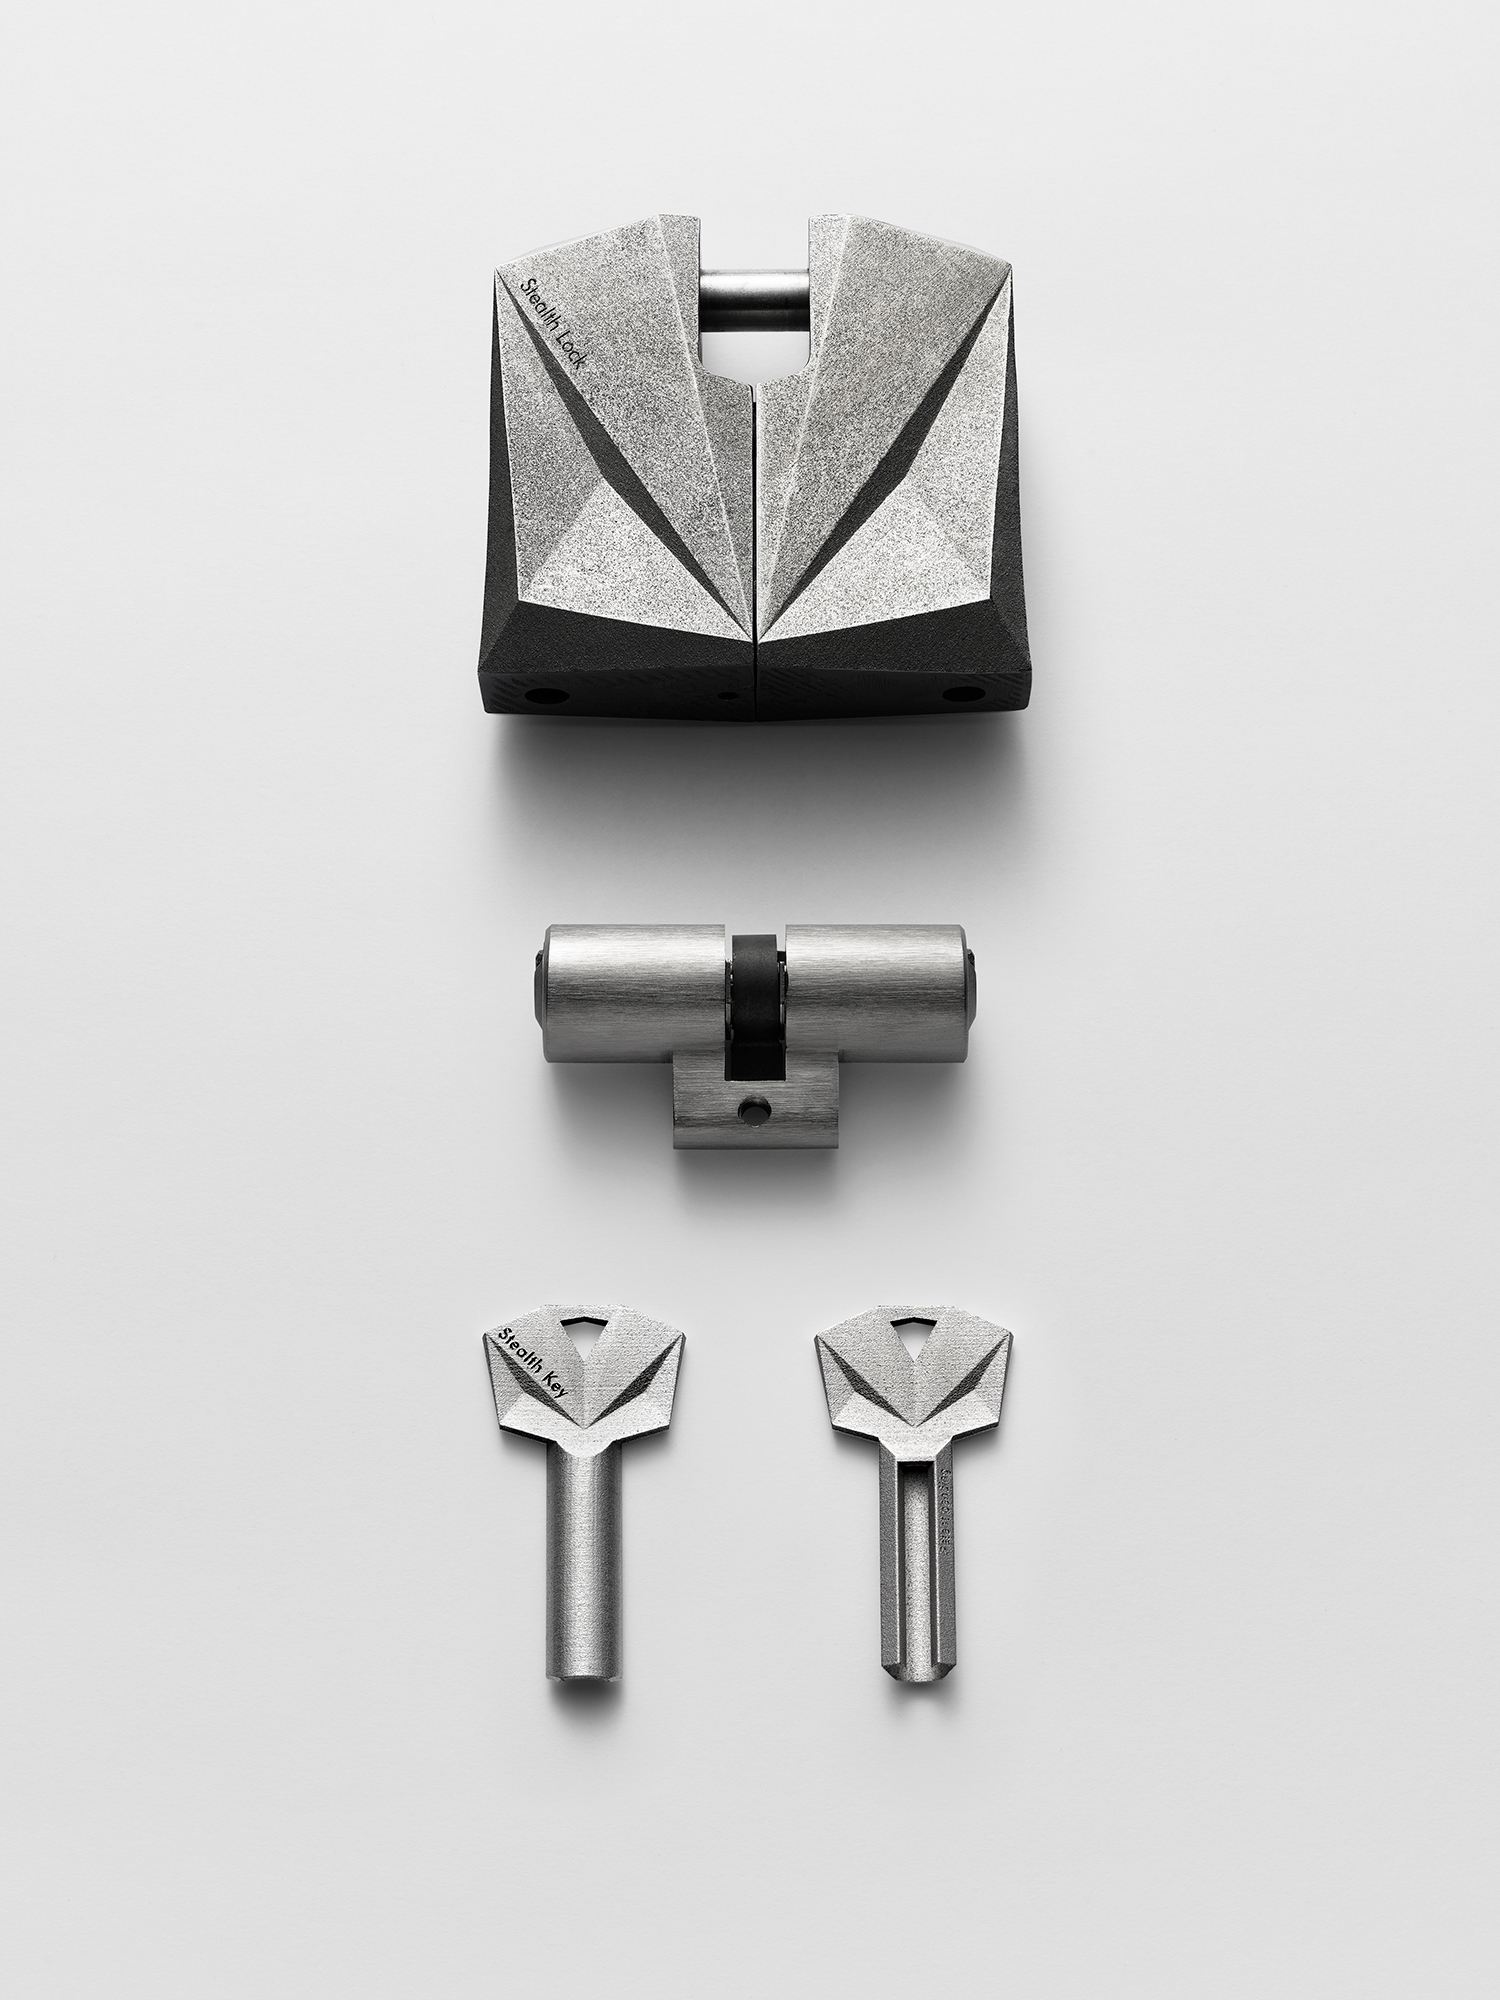 The 3D printed padlock, cylinder and keys. Image via UrbanAlps.